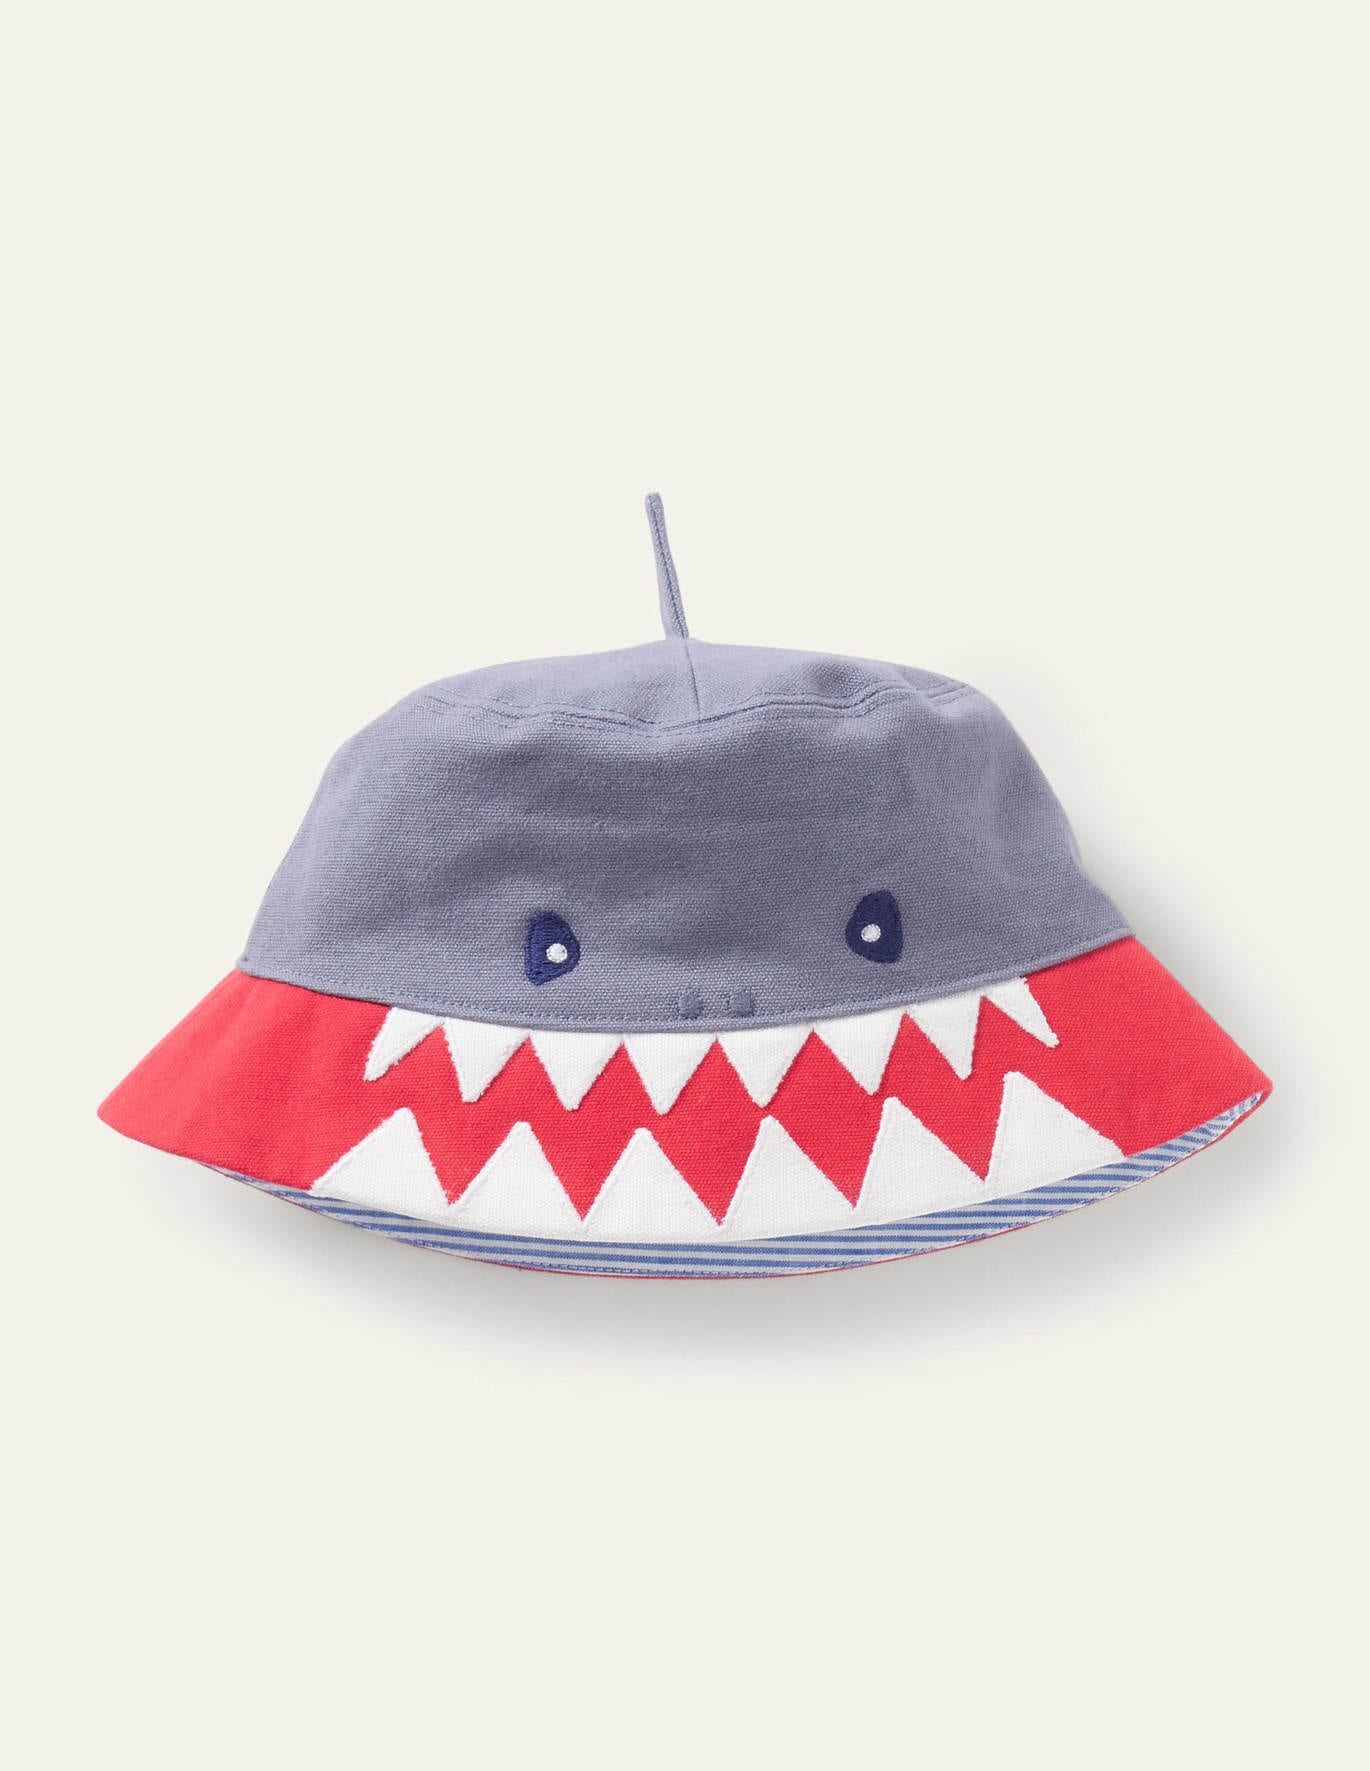 Boden Novelty Bucket Hat - Grey Shark